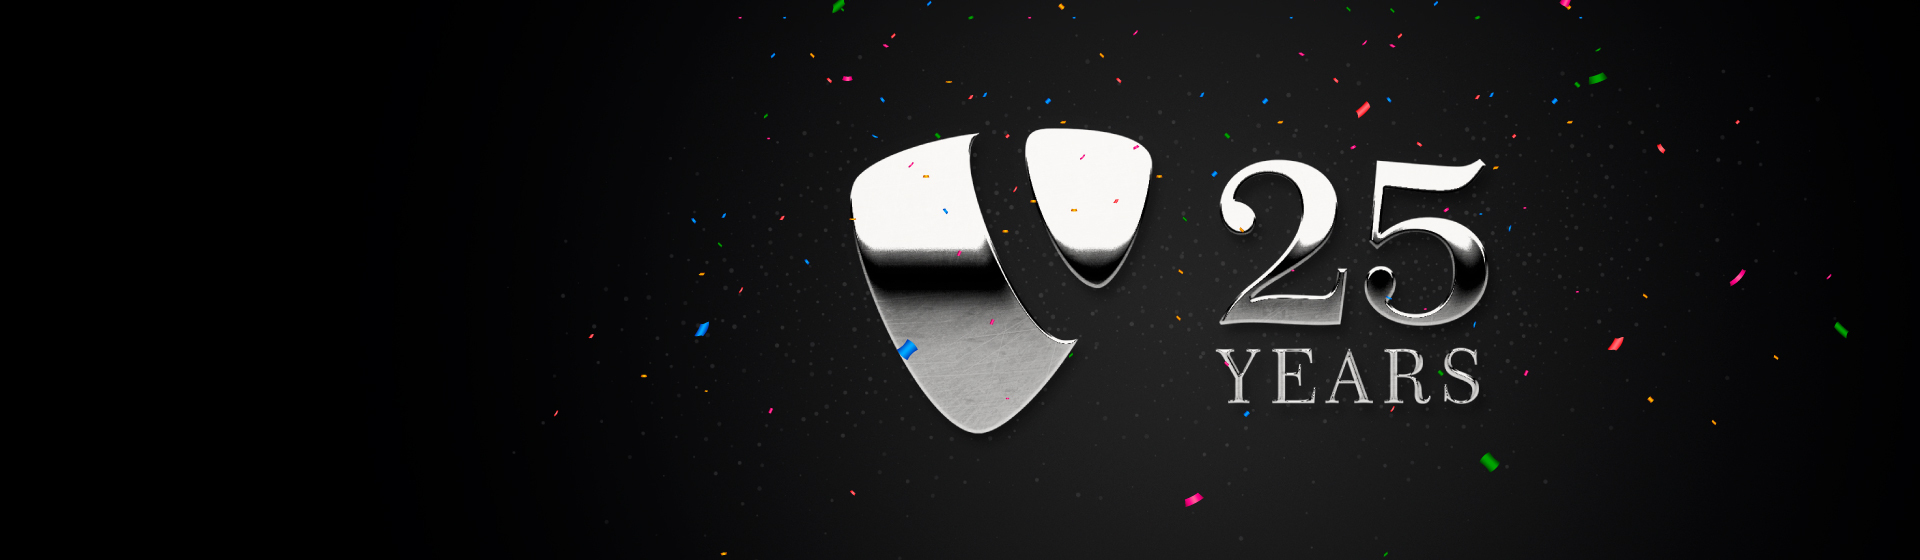 Celebrating TYPO3's 25th Anniversary!